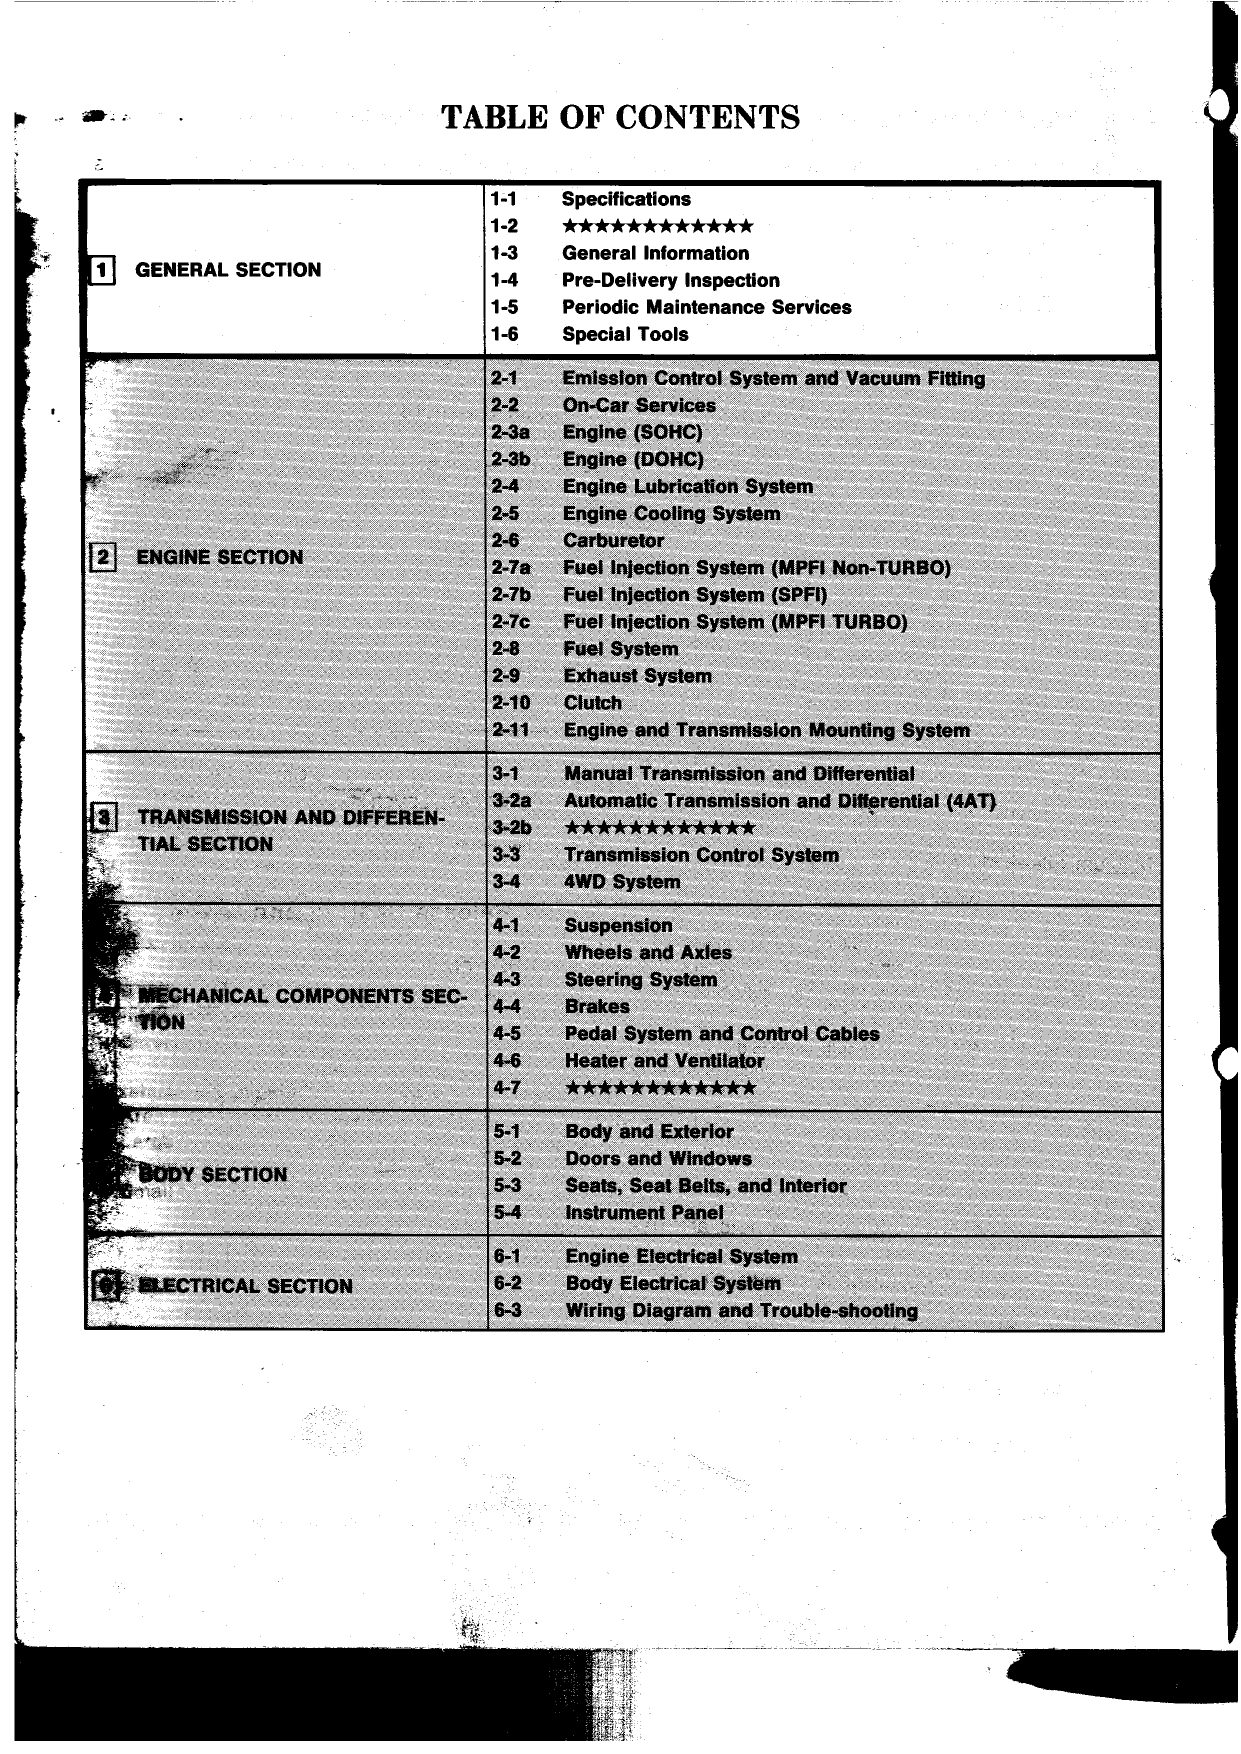 1992 Subaru Legacy service manual Preview image 5